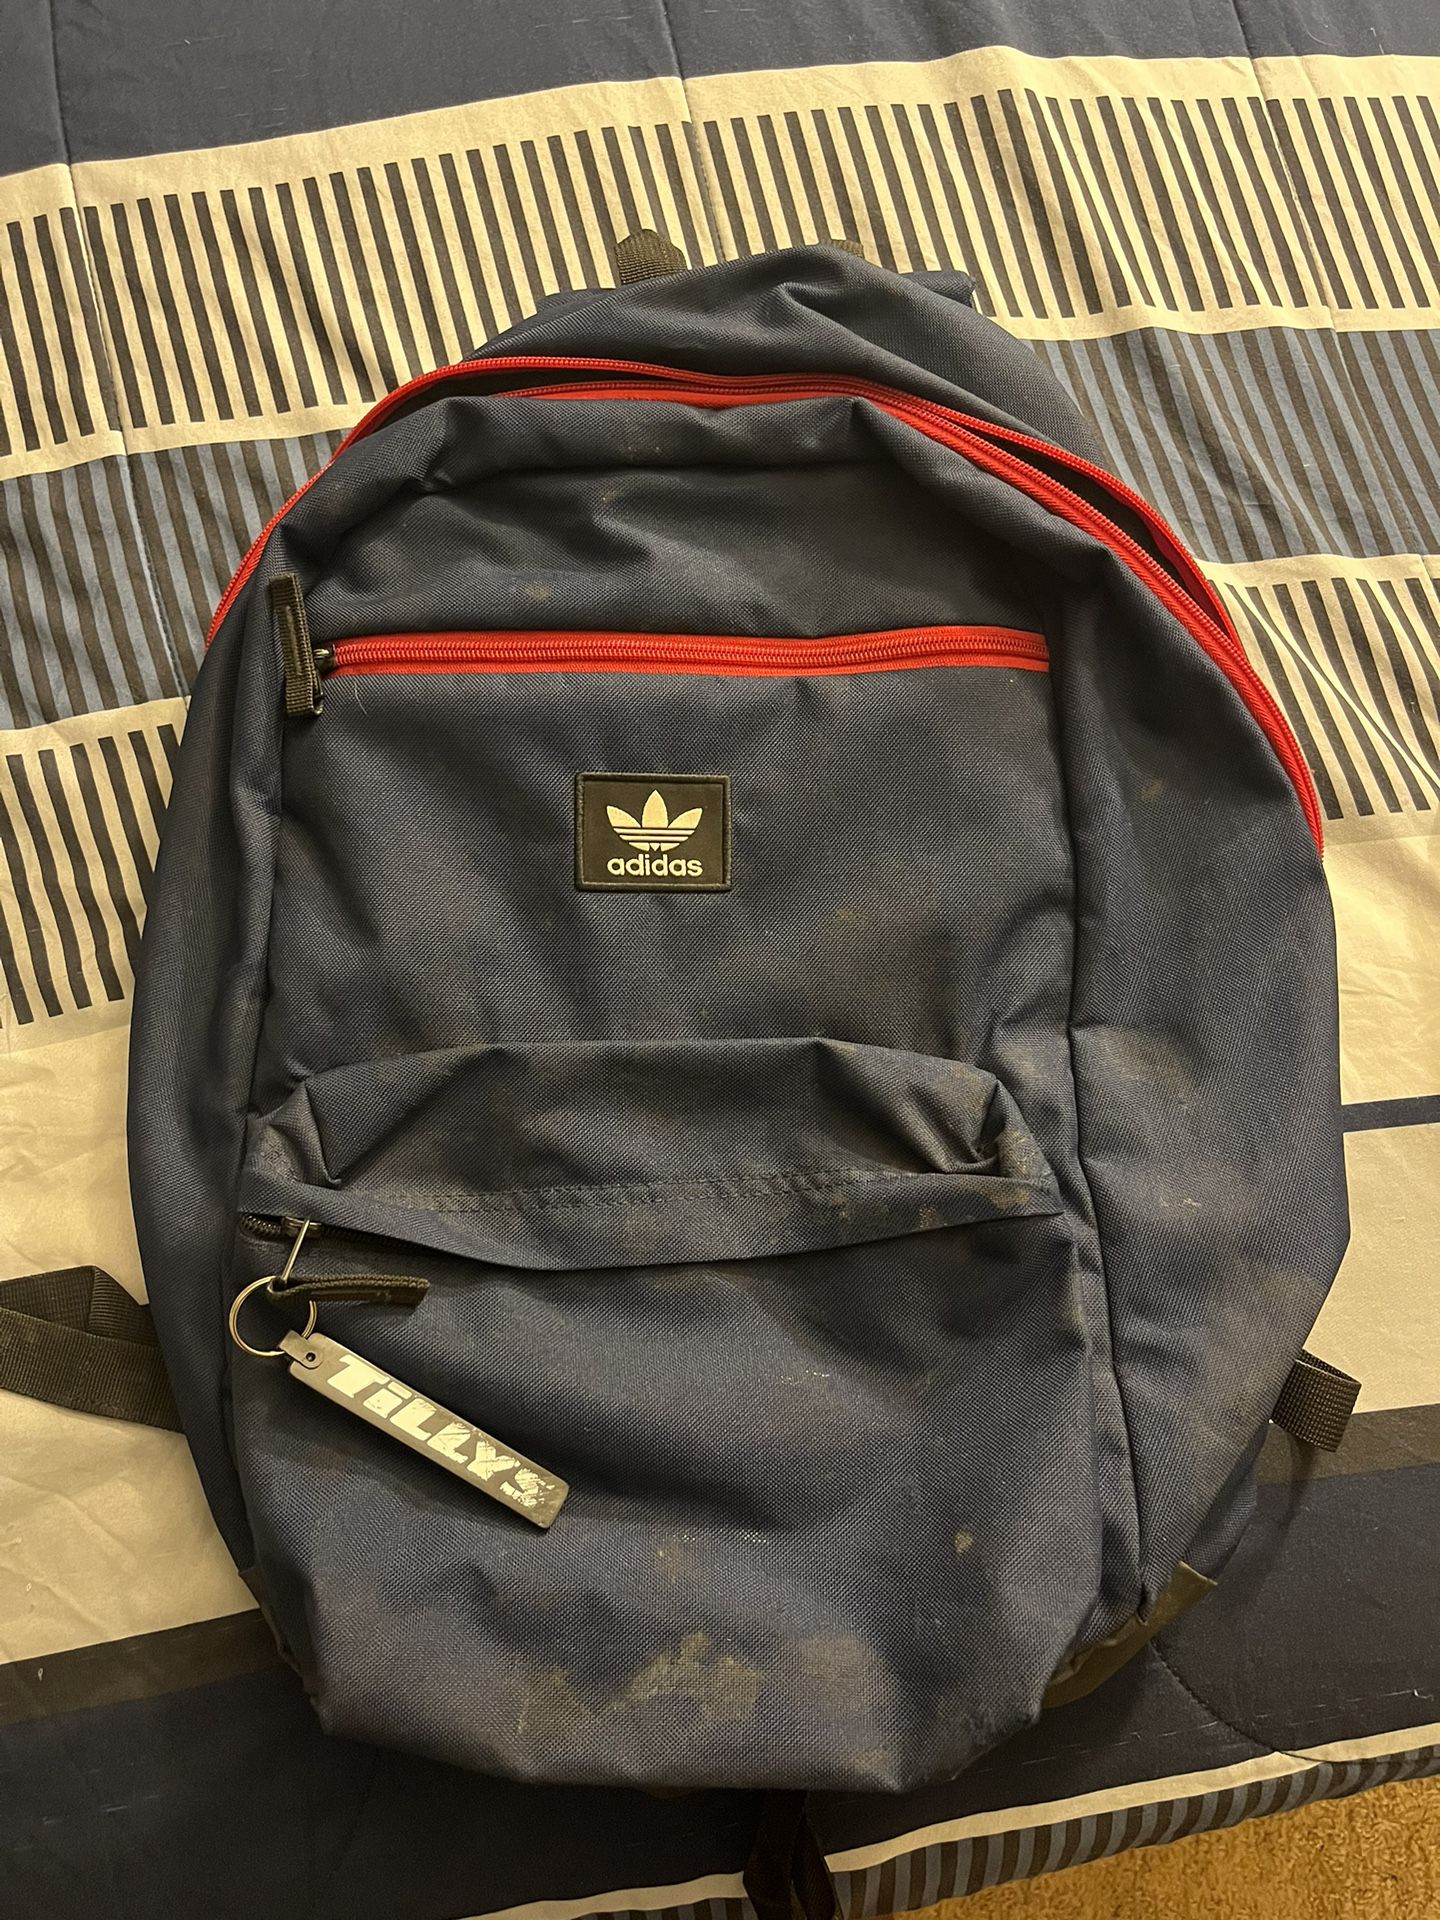 FREE Adidas Backpack 